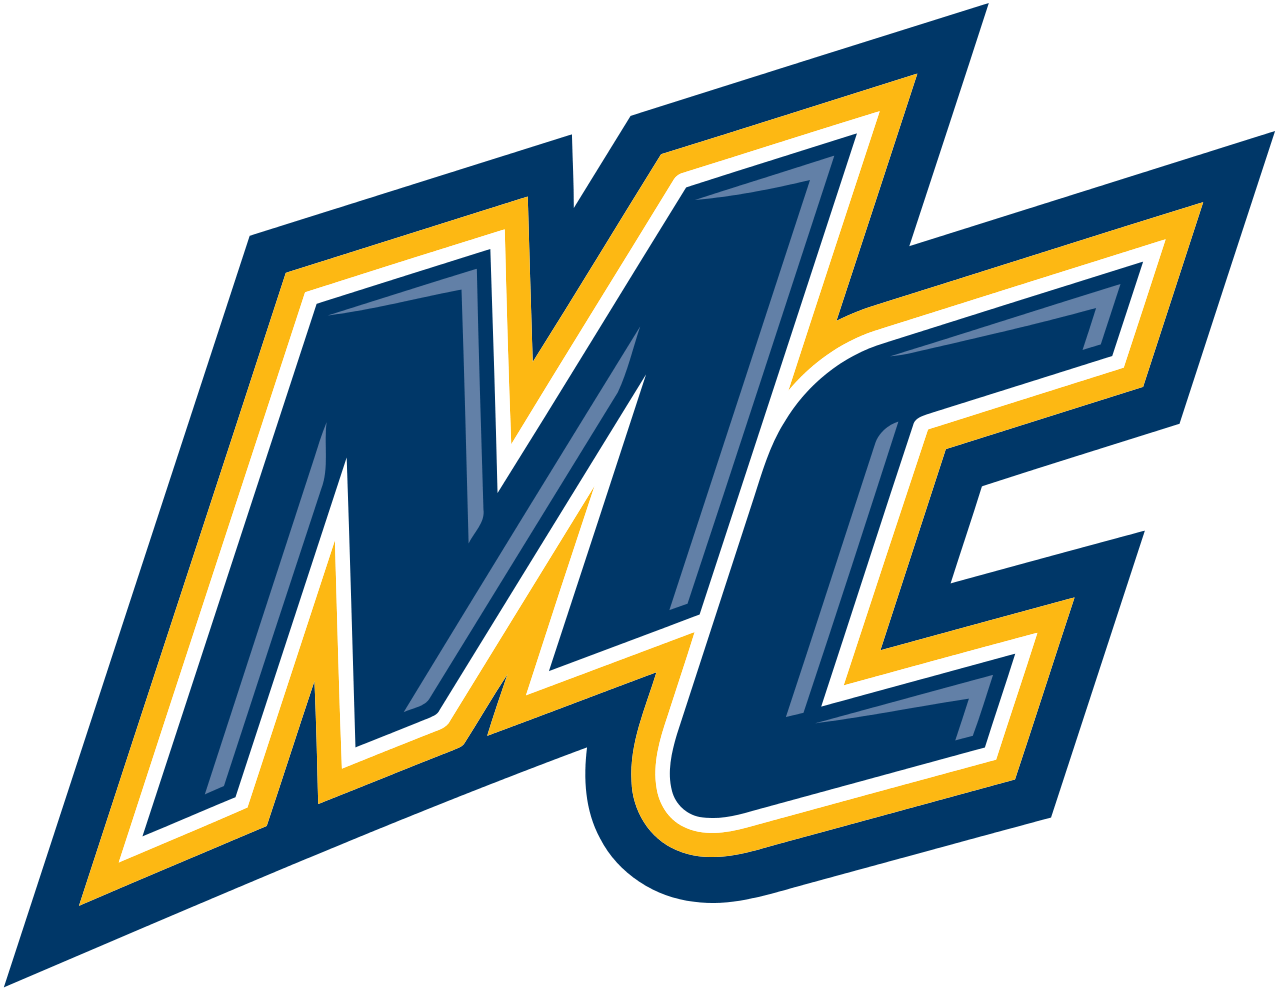 Blue and Yellow College Logo - Merrimack College. Edward Davis, LLC